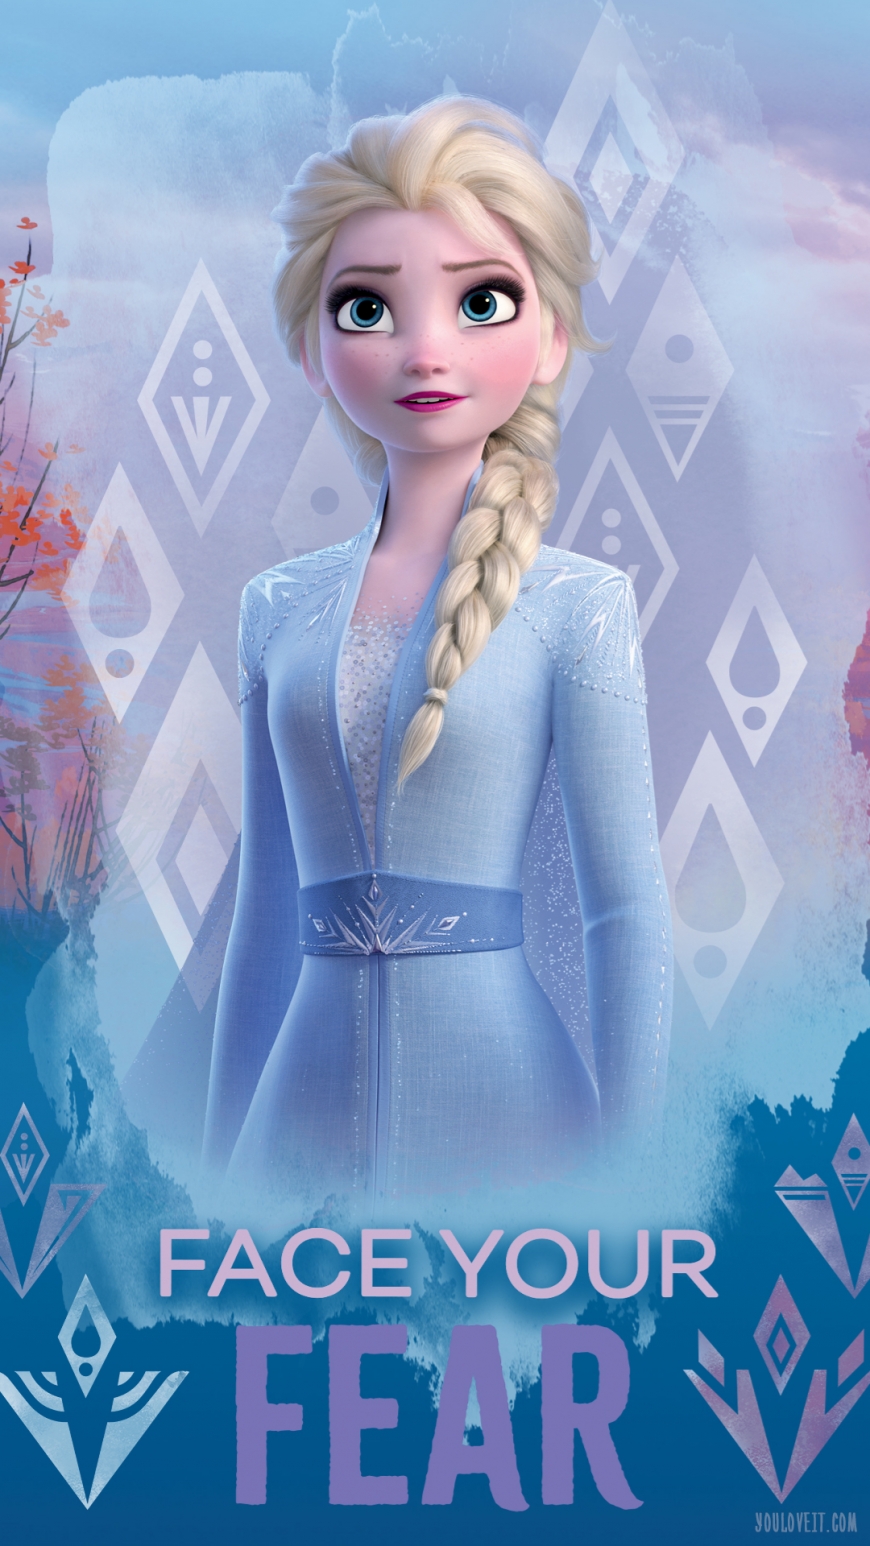 Frozen 2 phone image with Elsa